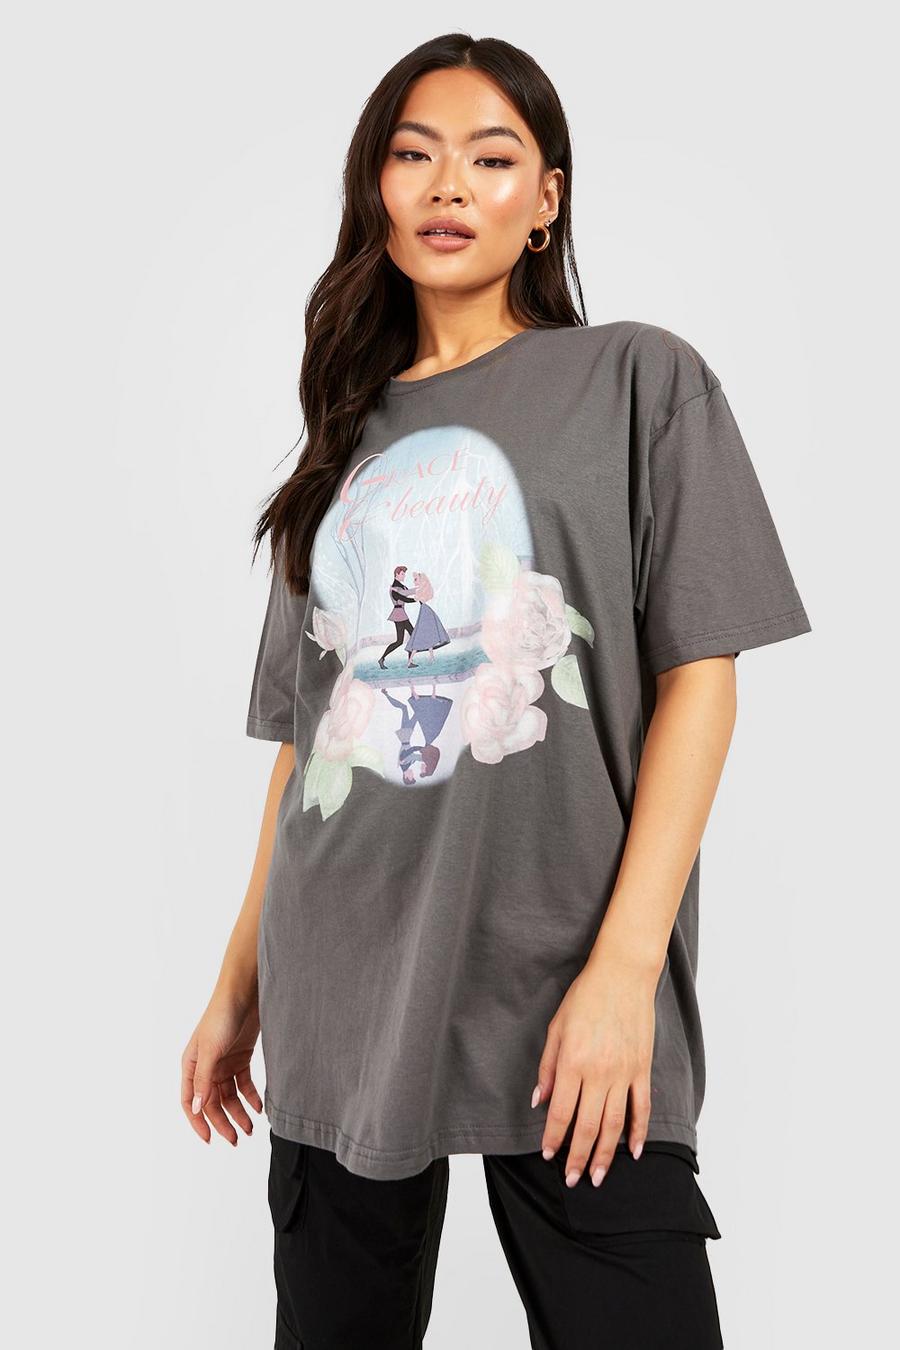 Charcoal grey Disney Princess Sleeping Beauty Graphic License T-shirt